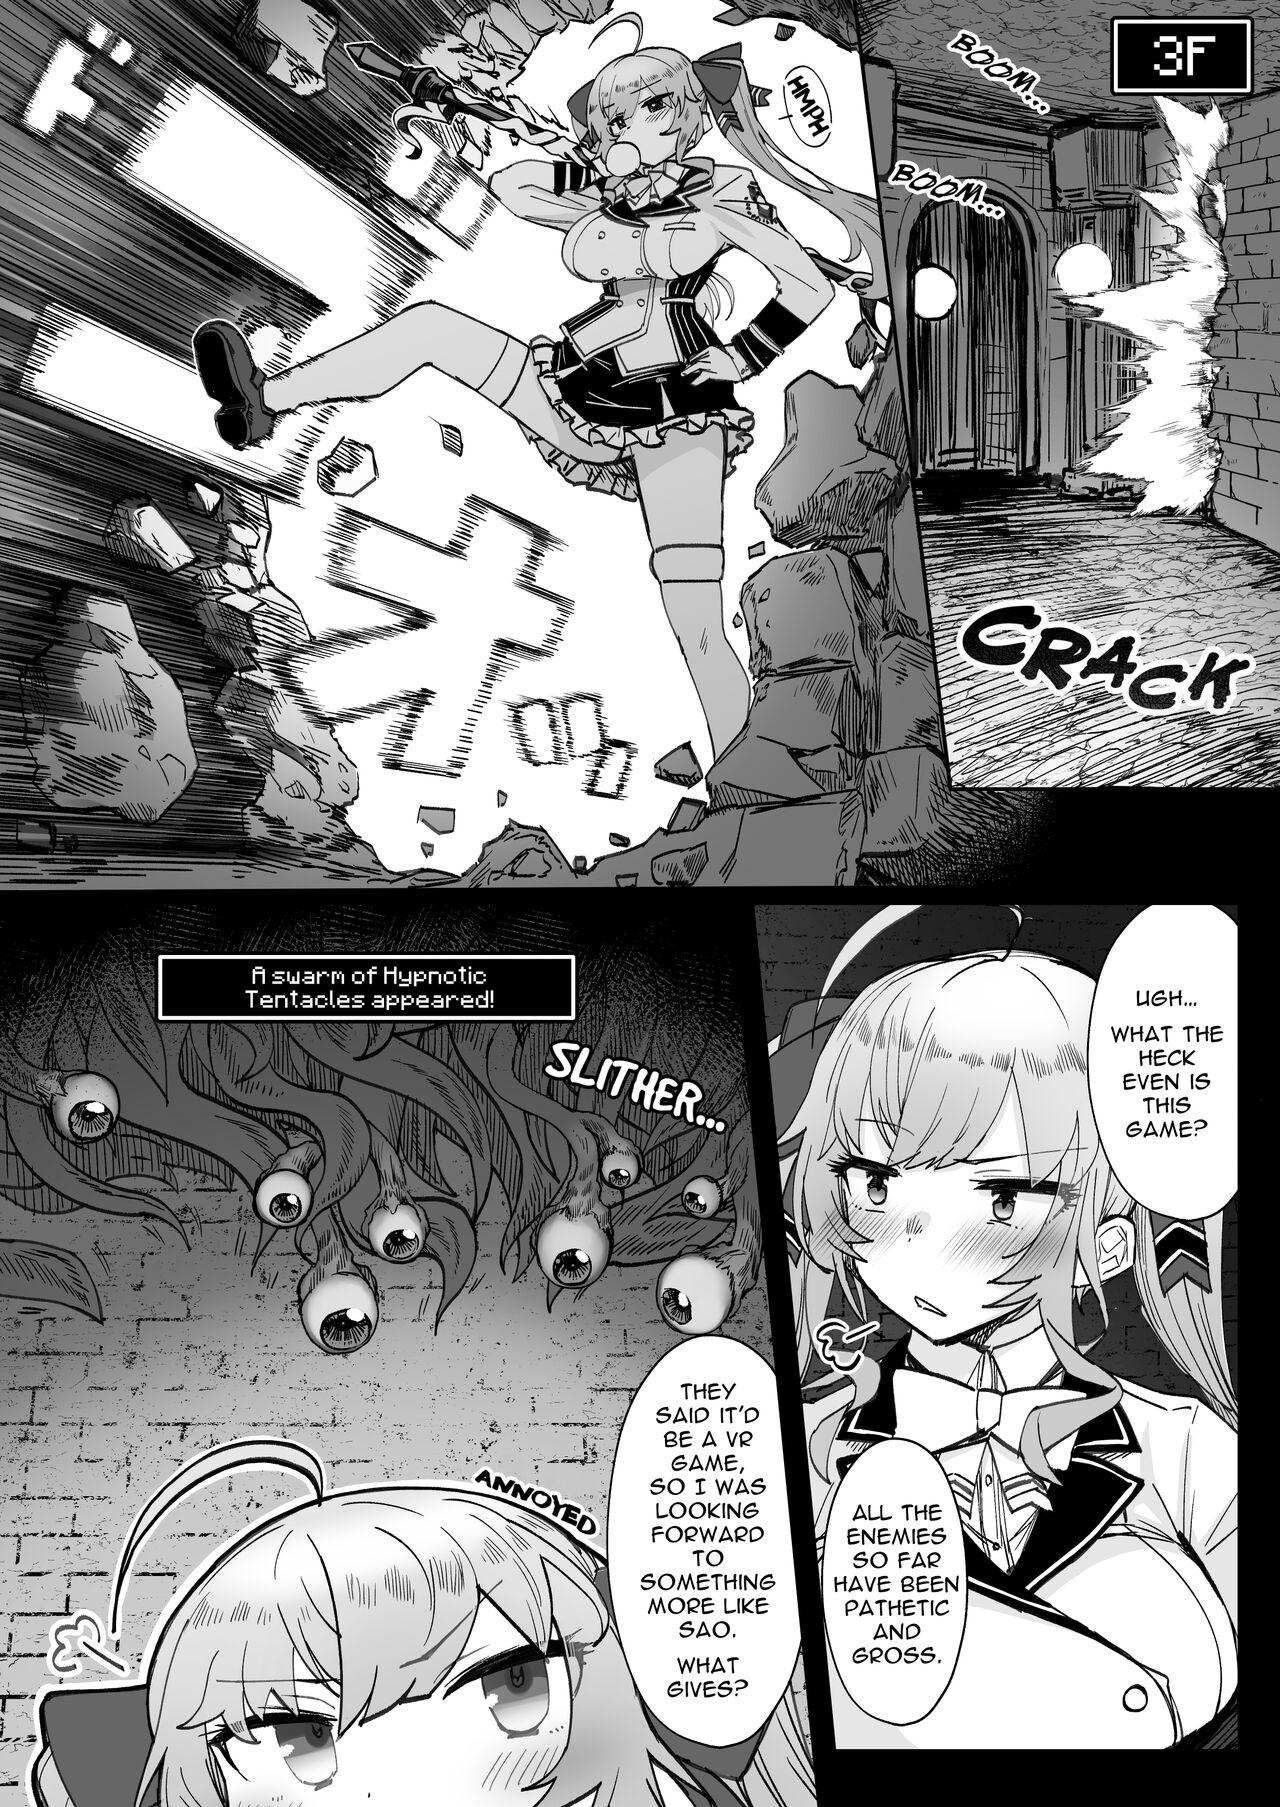 Off Niji Ero Trap Dungeon Bu 2 - Nijisanji Ero trap dungeon Gostosas - Page 5